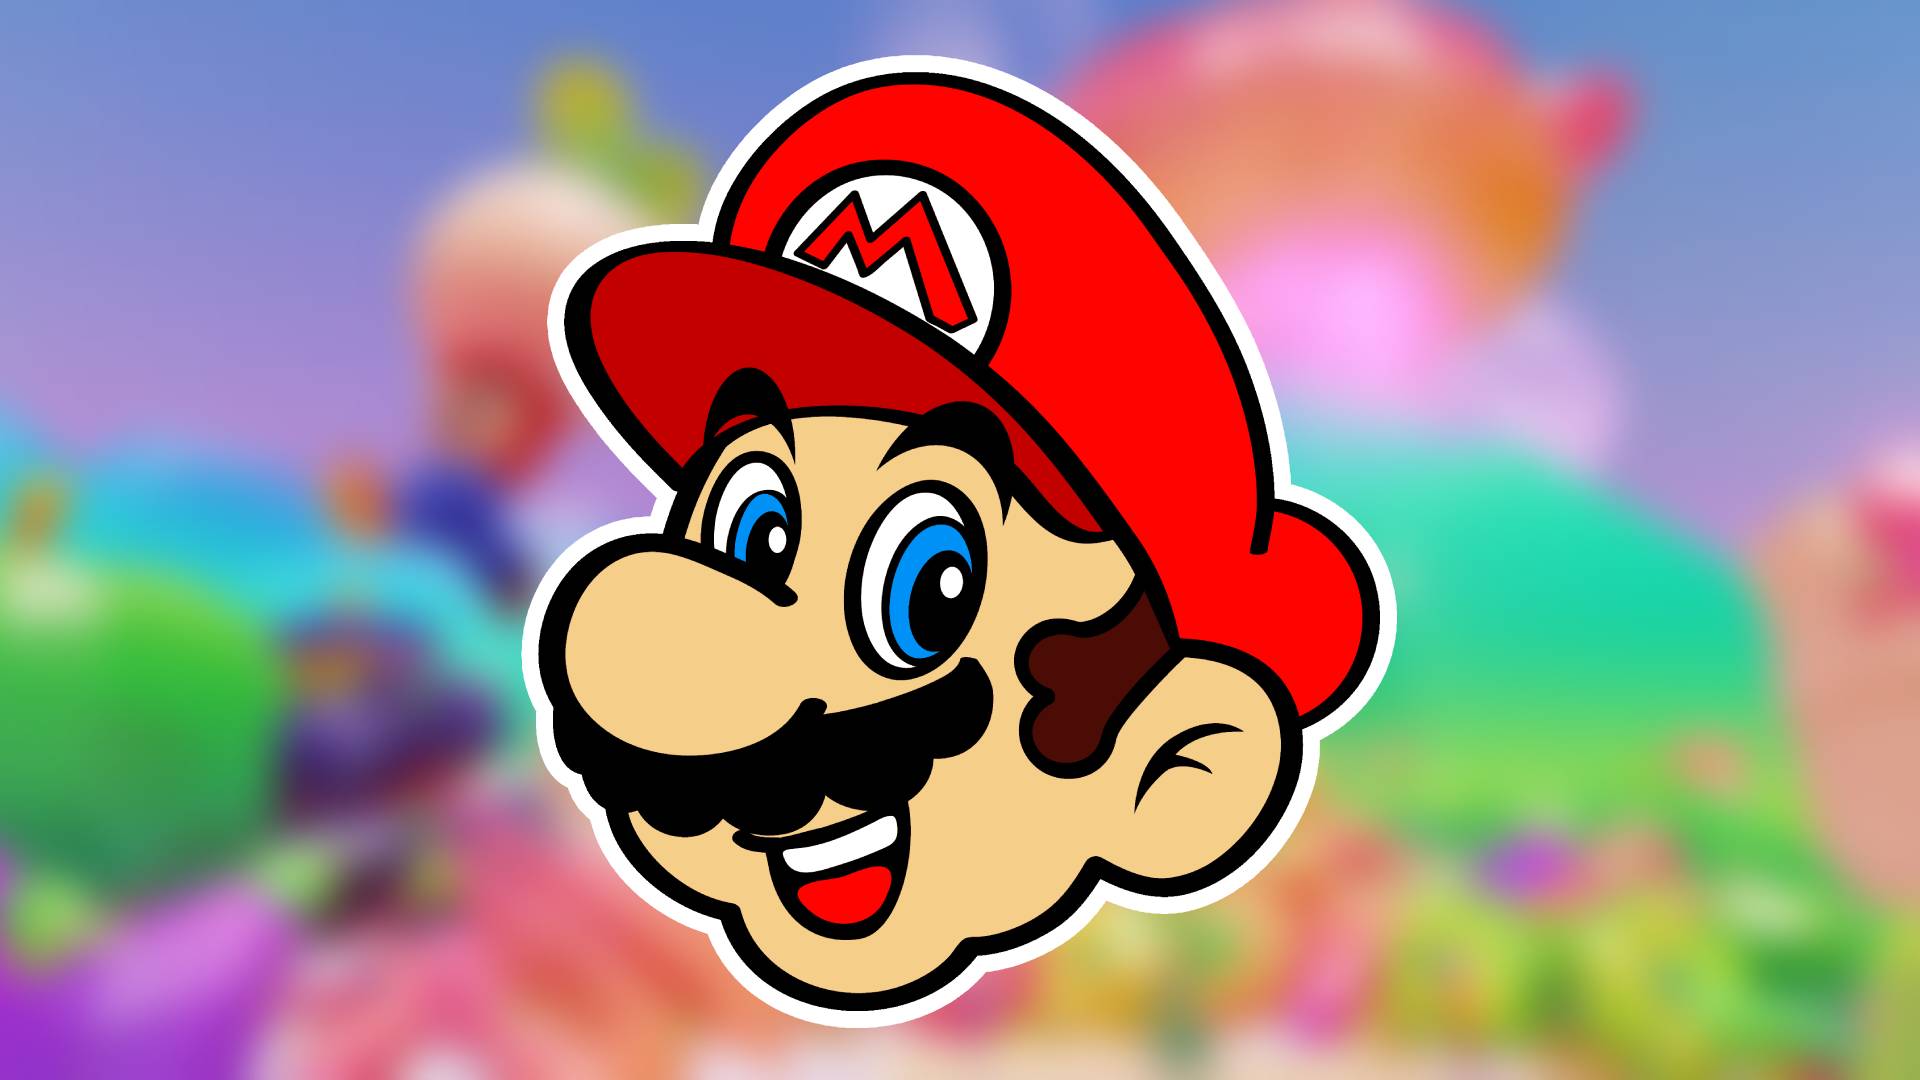 What Is Mario And Luigi’s Last Name?